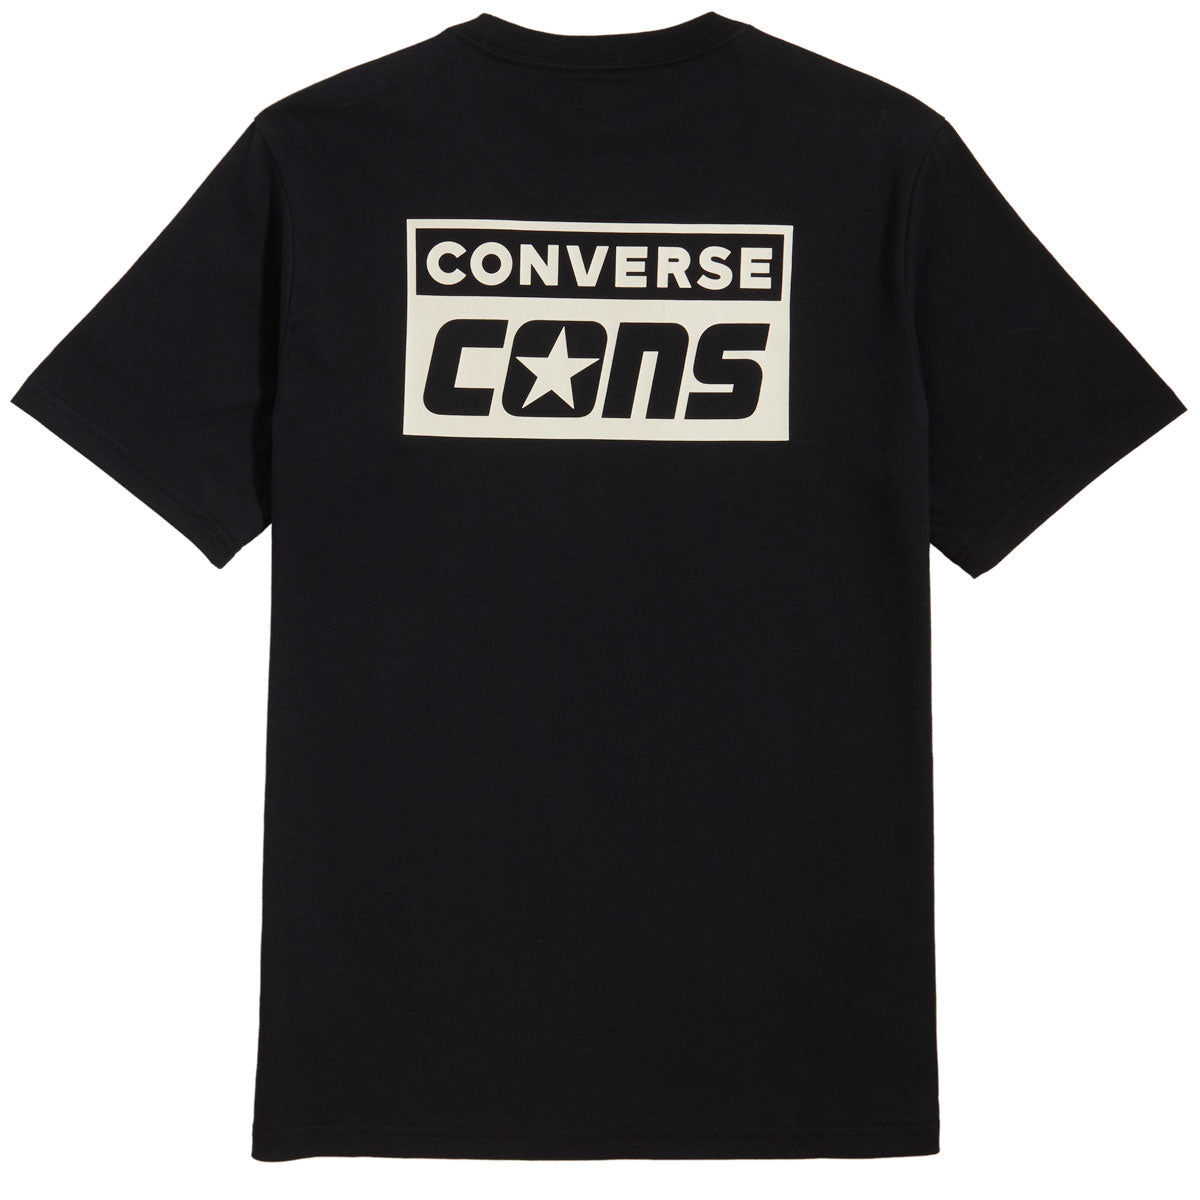 Converse Cons T-Shirt - Cons Black image 2